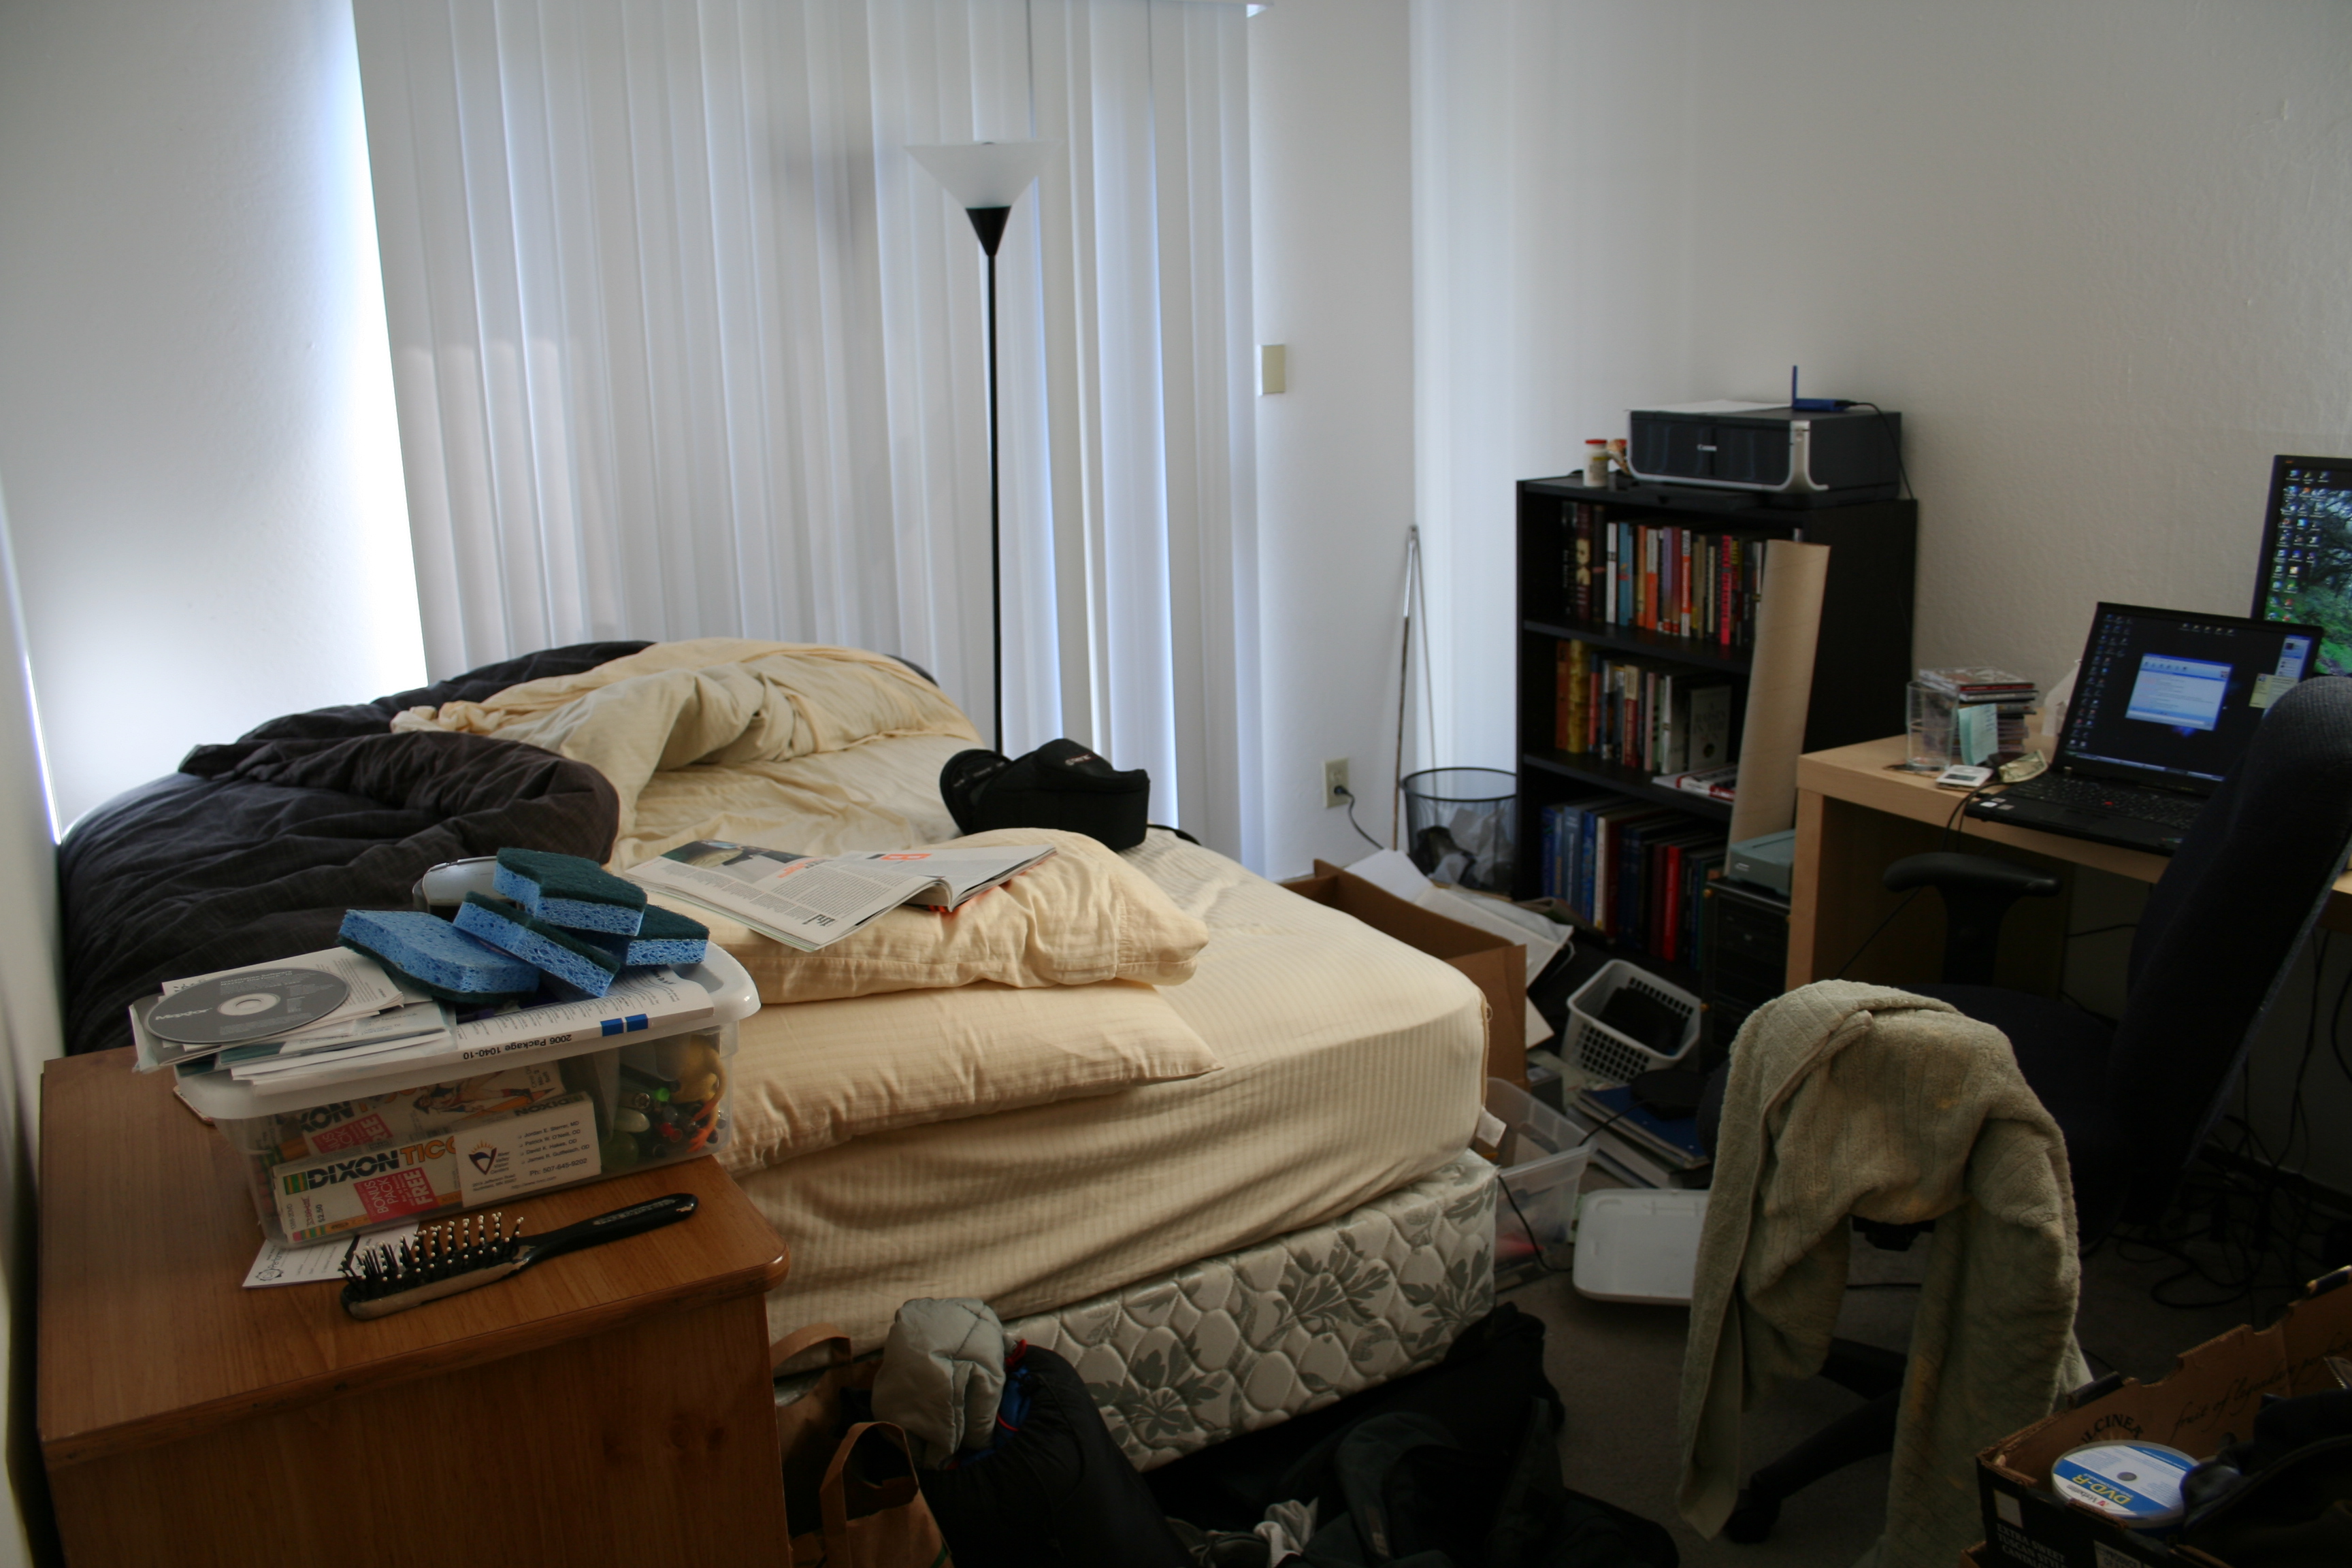 Messy bedroom by ImipolexG, via Flickr | Messy bedroom ...
